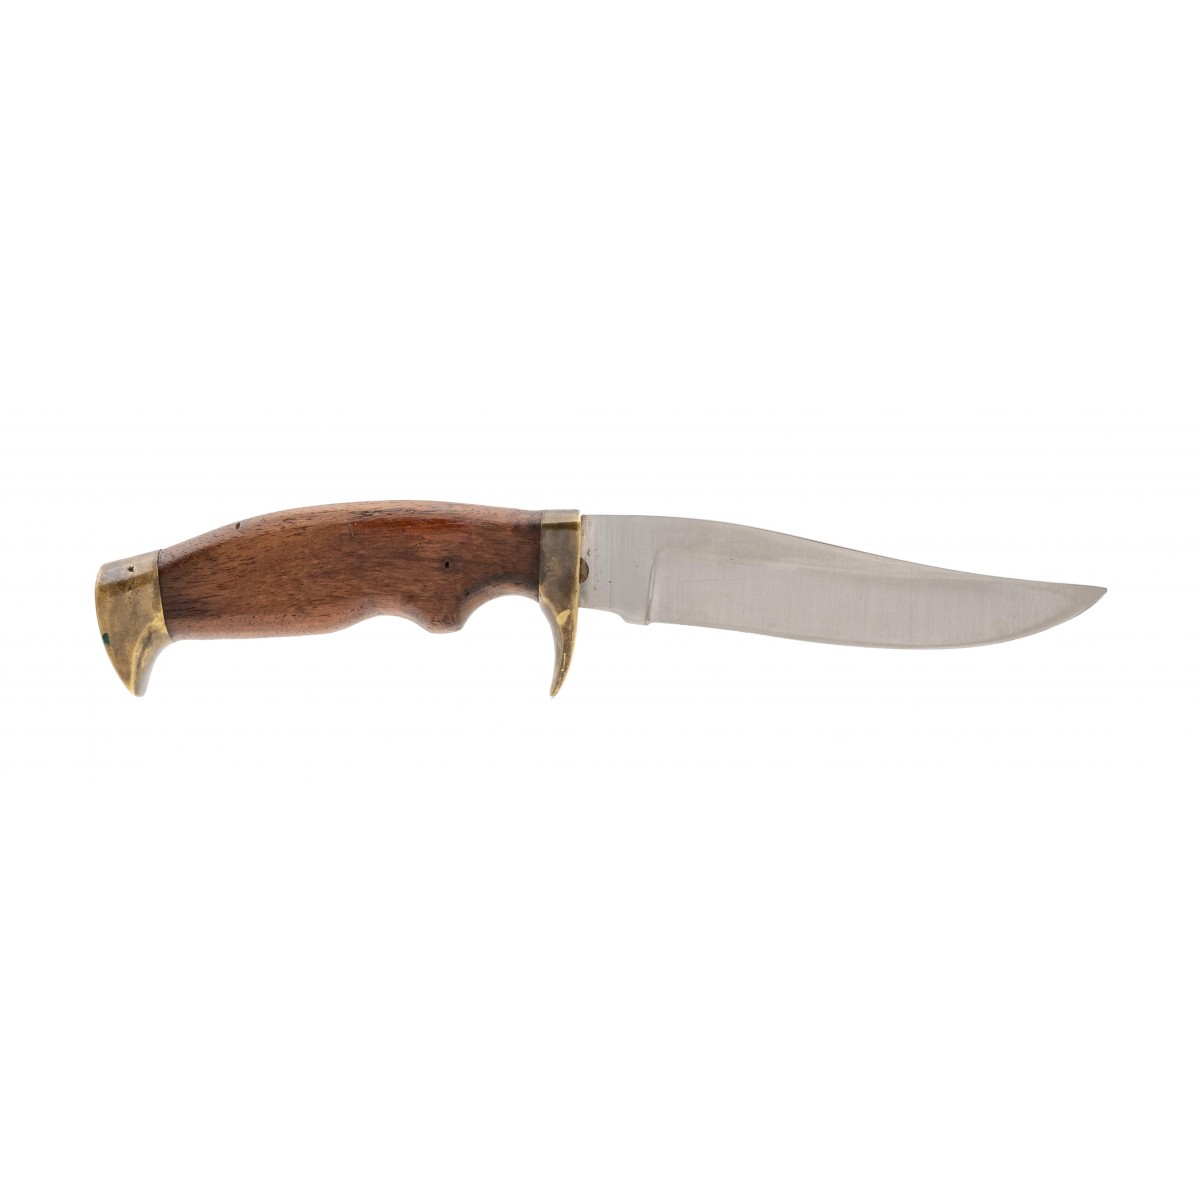 Early Signed Jimmy Lile Prototype Knife (K2305)